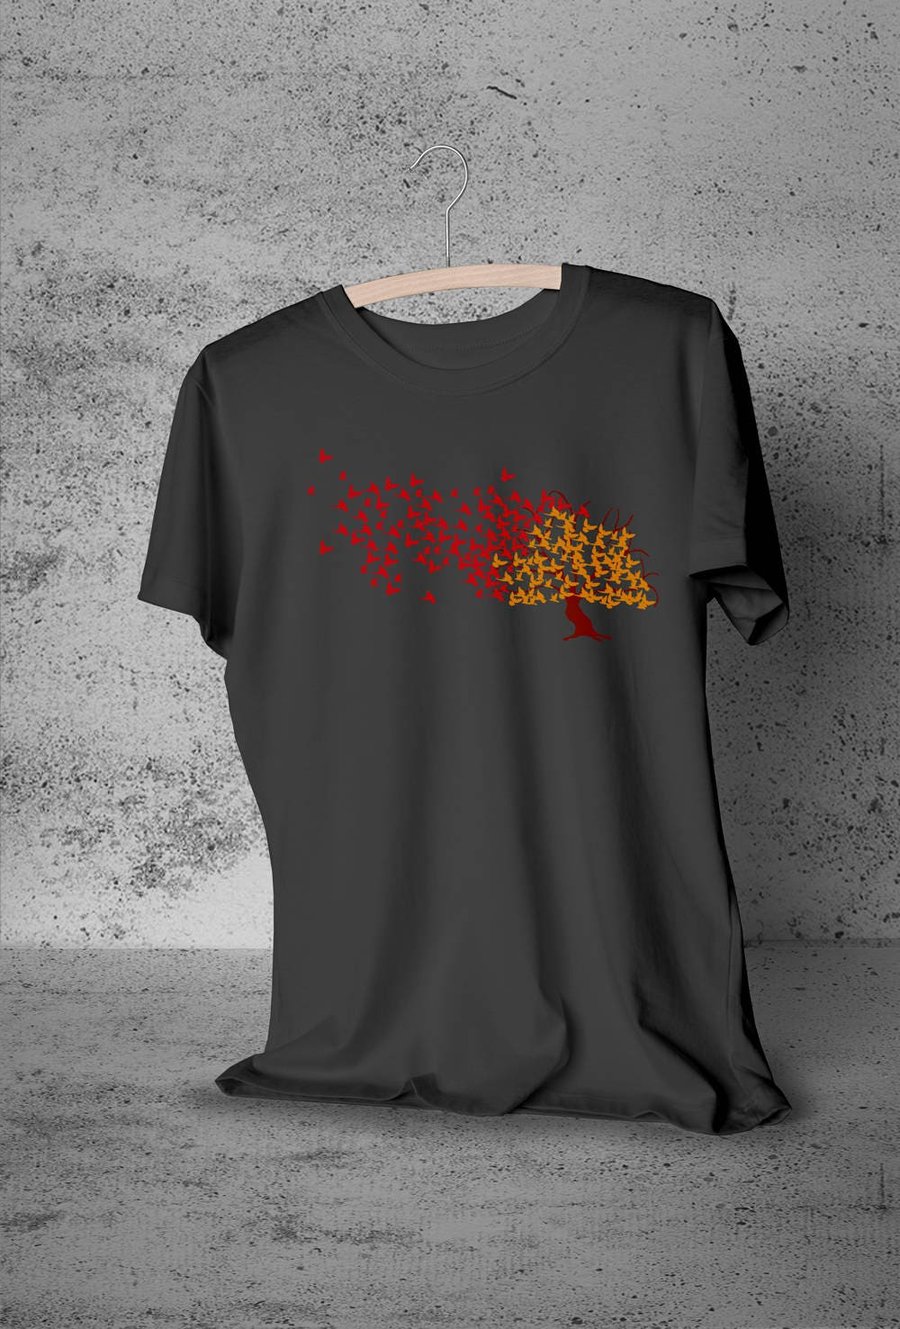 Nature Lover T-Shirt. Birds and tree illustration, male female. Treebird 